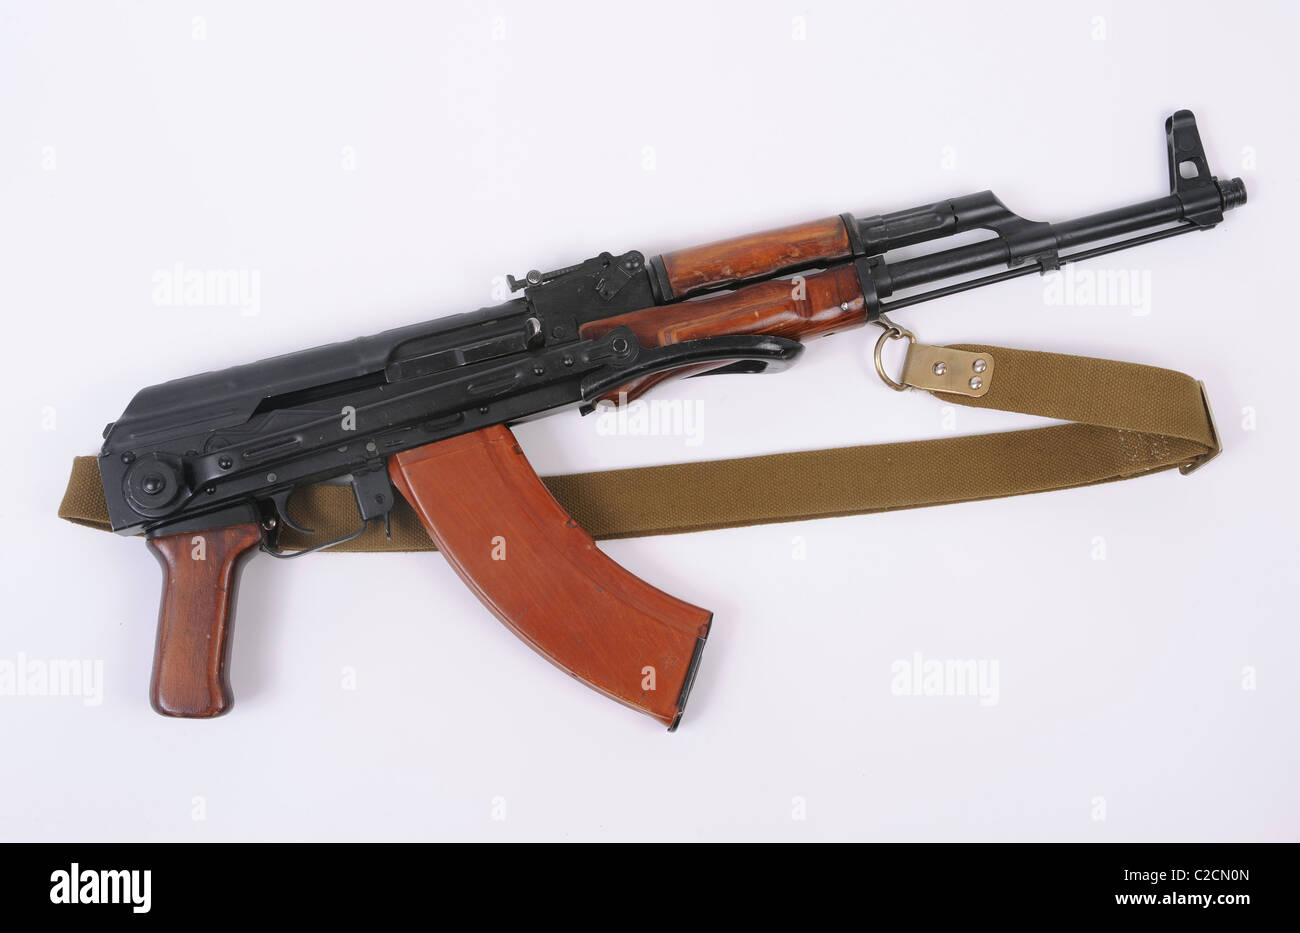 Russian AKMS rifle. Modernized folding stock version of the ubiquitous AK47 Kalashnikov assault rifle. Stock Photo